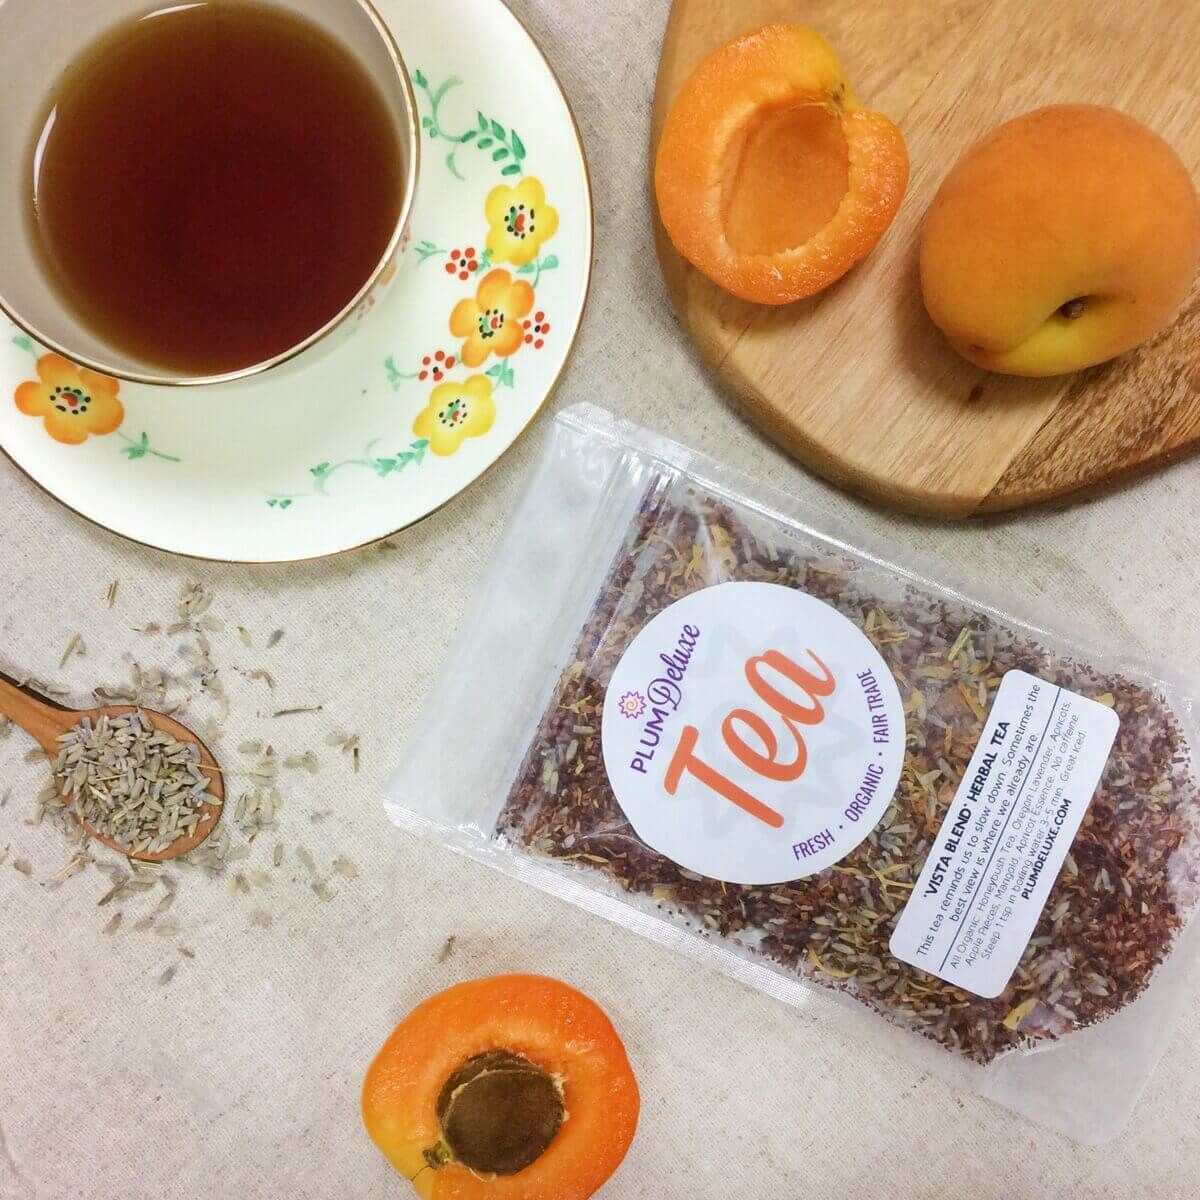 Plum Deluxe Tea 'Vista Blend' Herbal Tea (Apricot - Lavender) by Plum Deluxe Tea